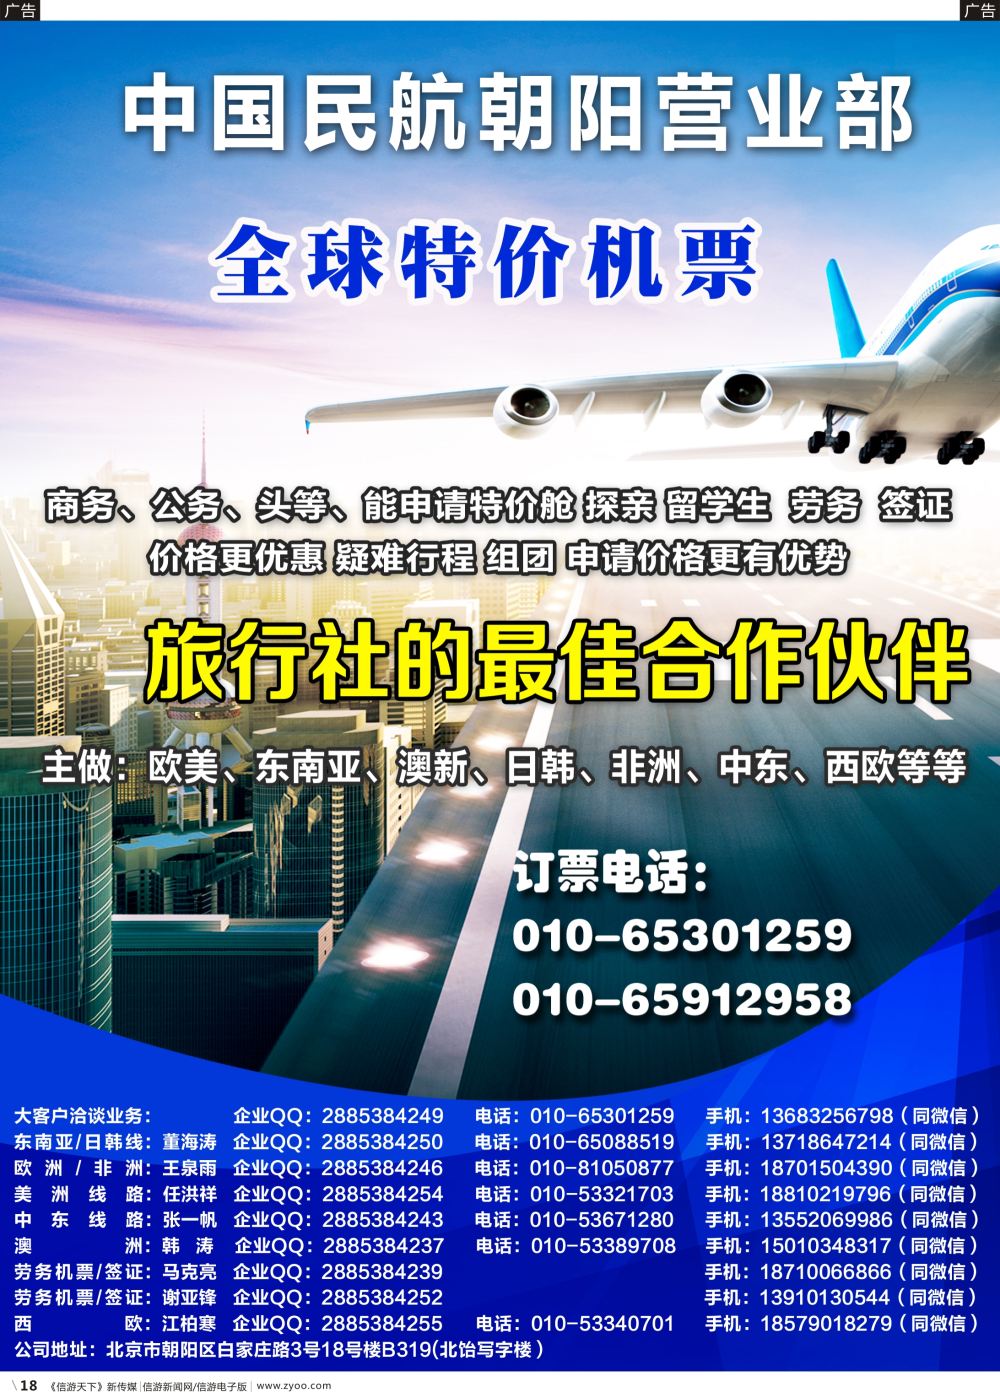 b018 中国民航朝阳营业部（广东国际+大华东）